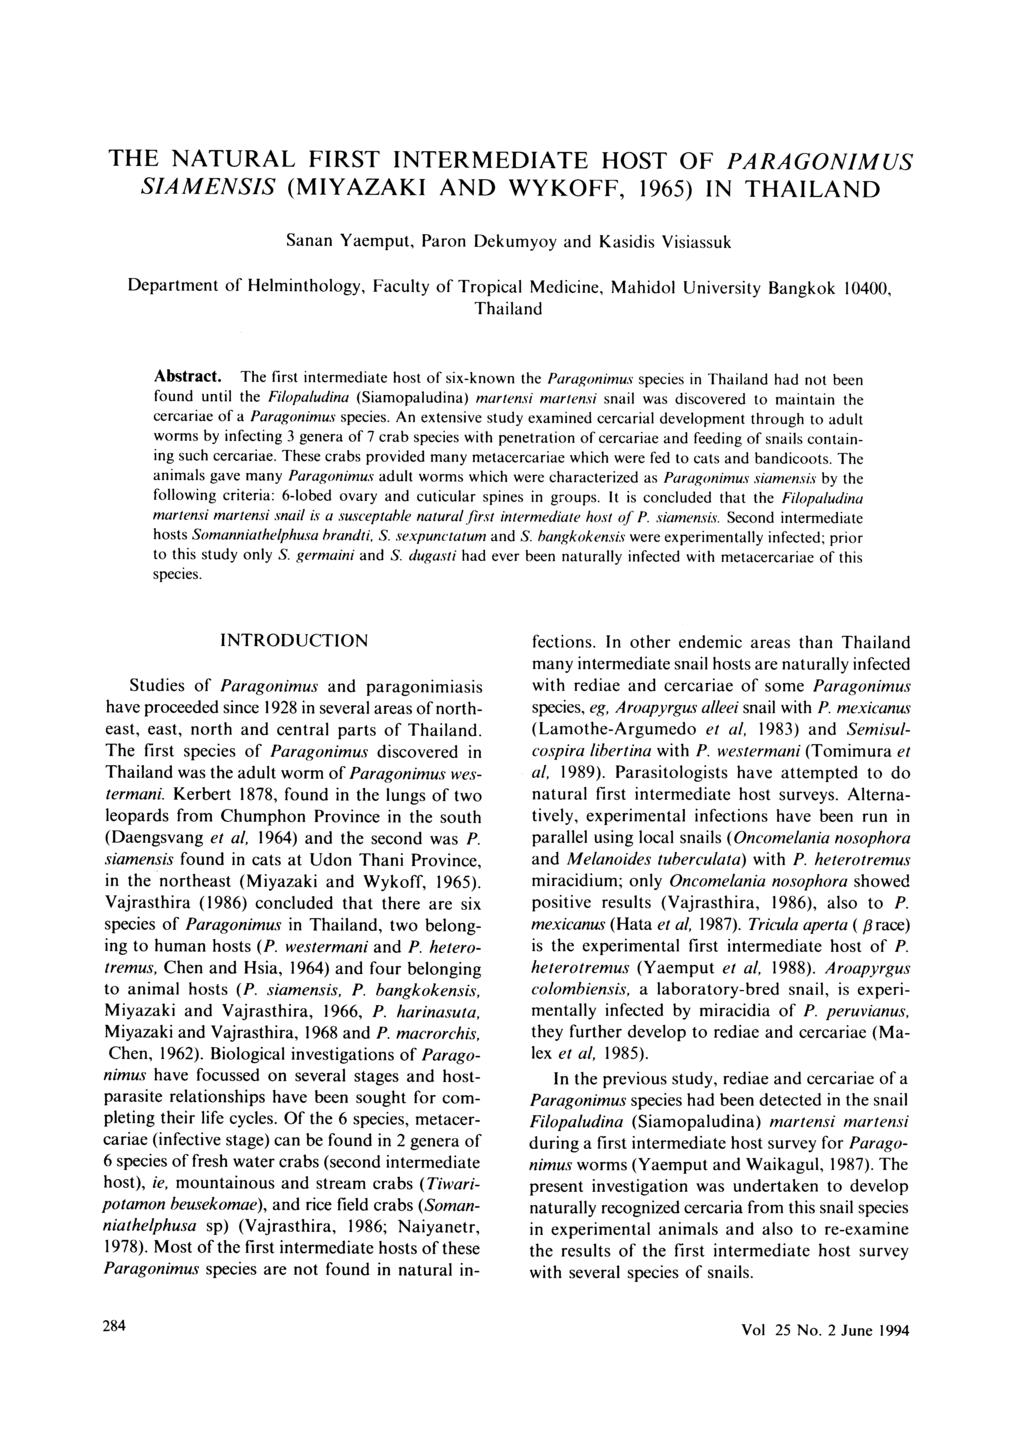 THE NATURAL FIRST INTERMEDIATE HOST OF PARAGONIMUS SJAMENSIS (MIYAZAKI AND WYKOFF, 1965) IN THAILAND Sanan Yaemput, Paron Dekumyoy and Kasidis Visiassuk Department of Helminthology, Faculty of